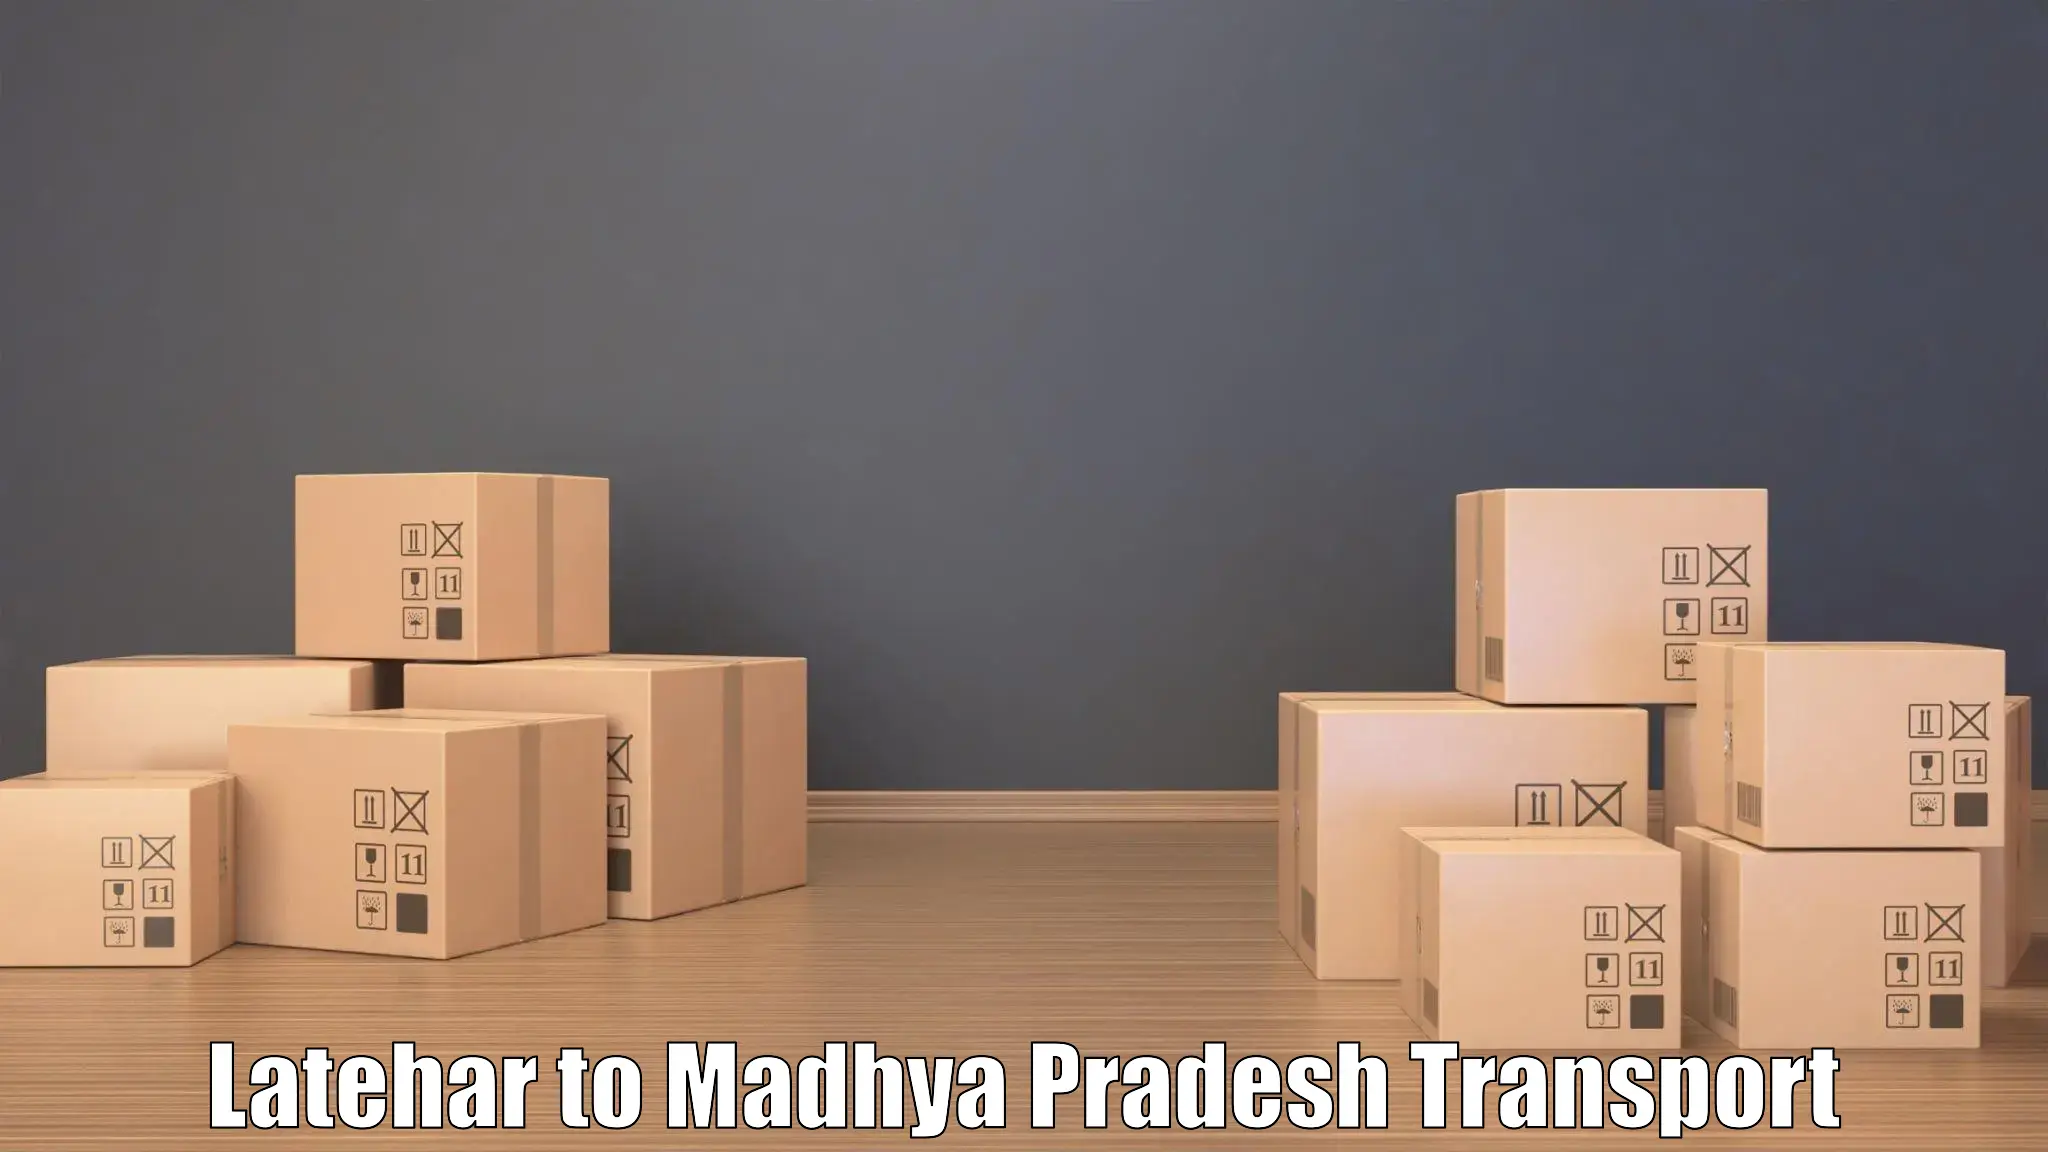 Truck transport companies in India Latehar to Nalkheda